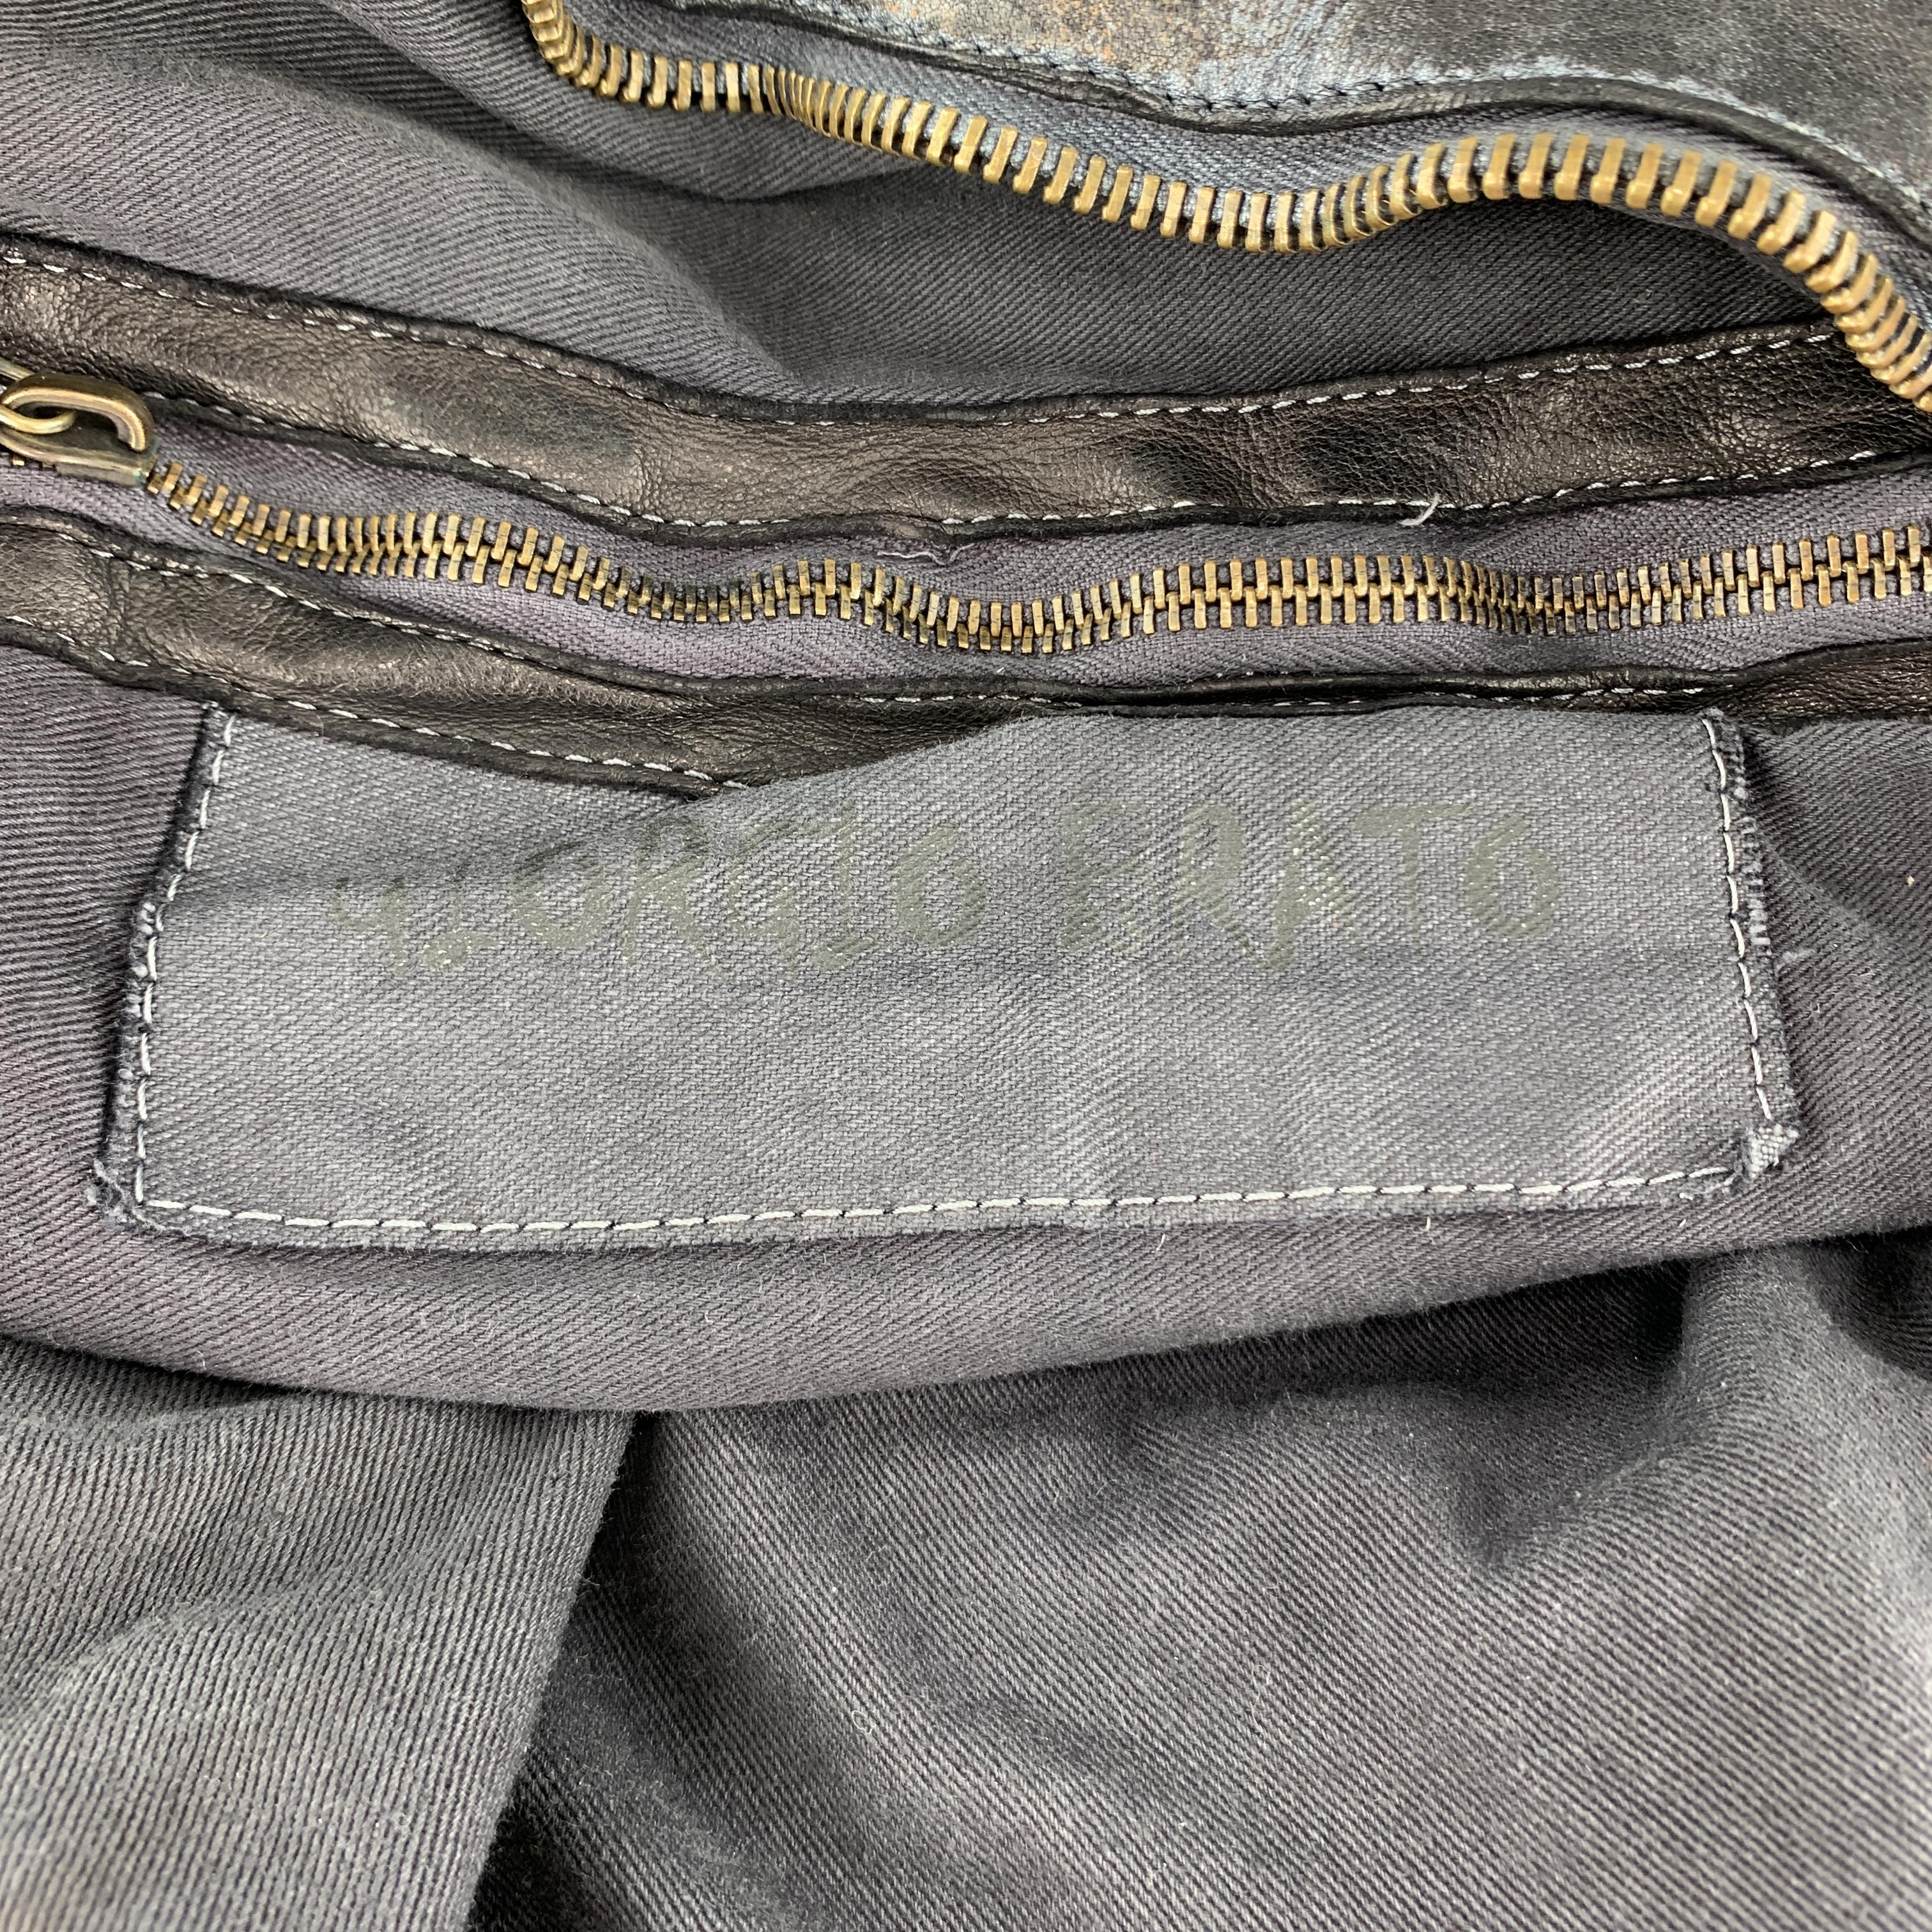 GIORGIO BRATO Distressed Gunmetal Metallic Leather Satchel Handbag 1